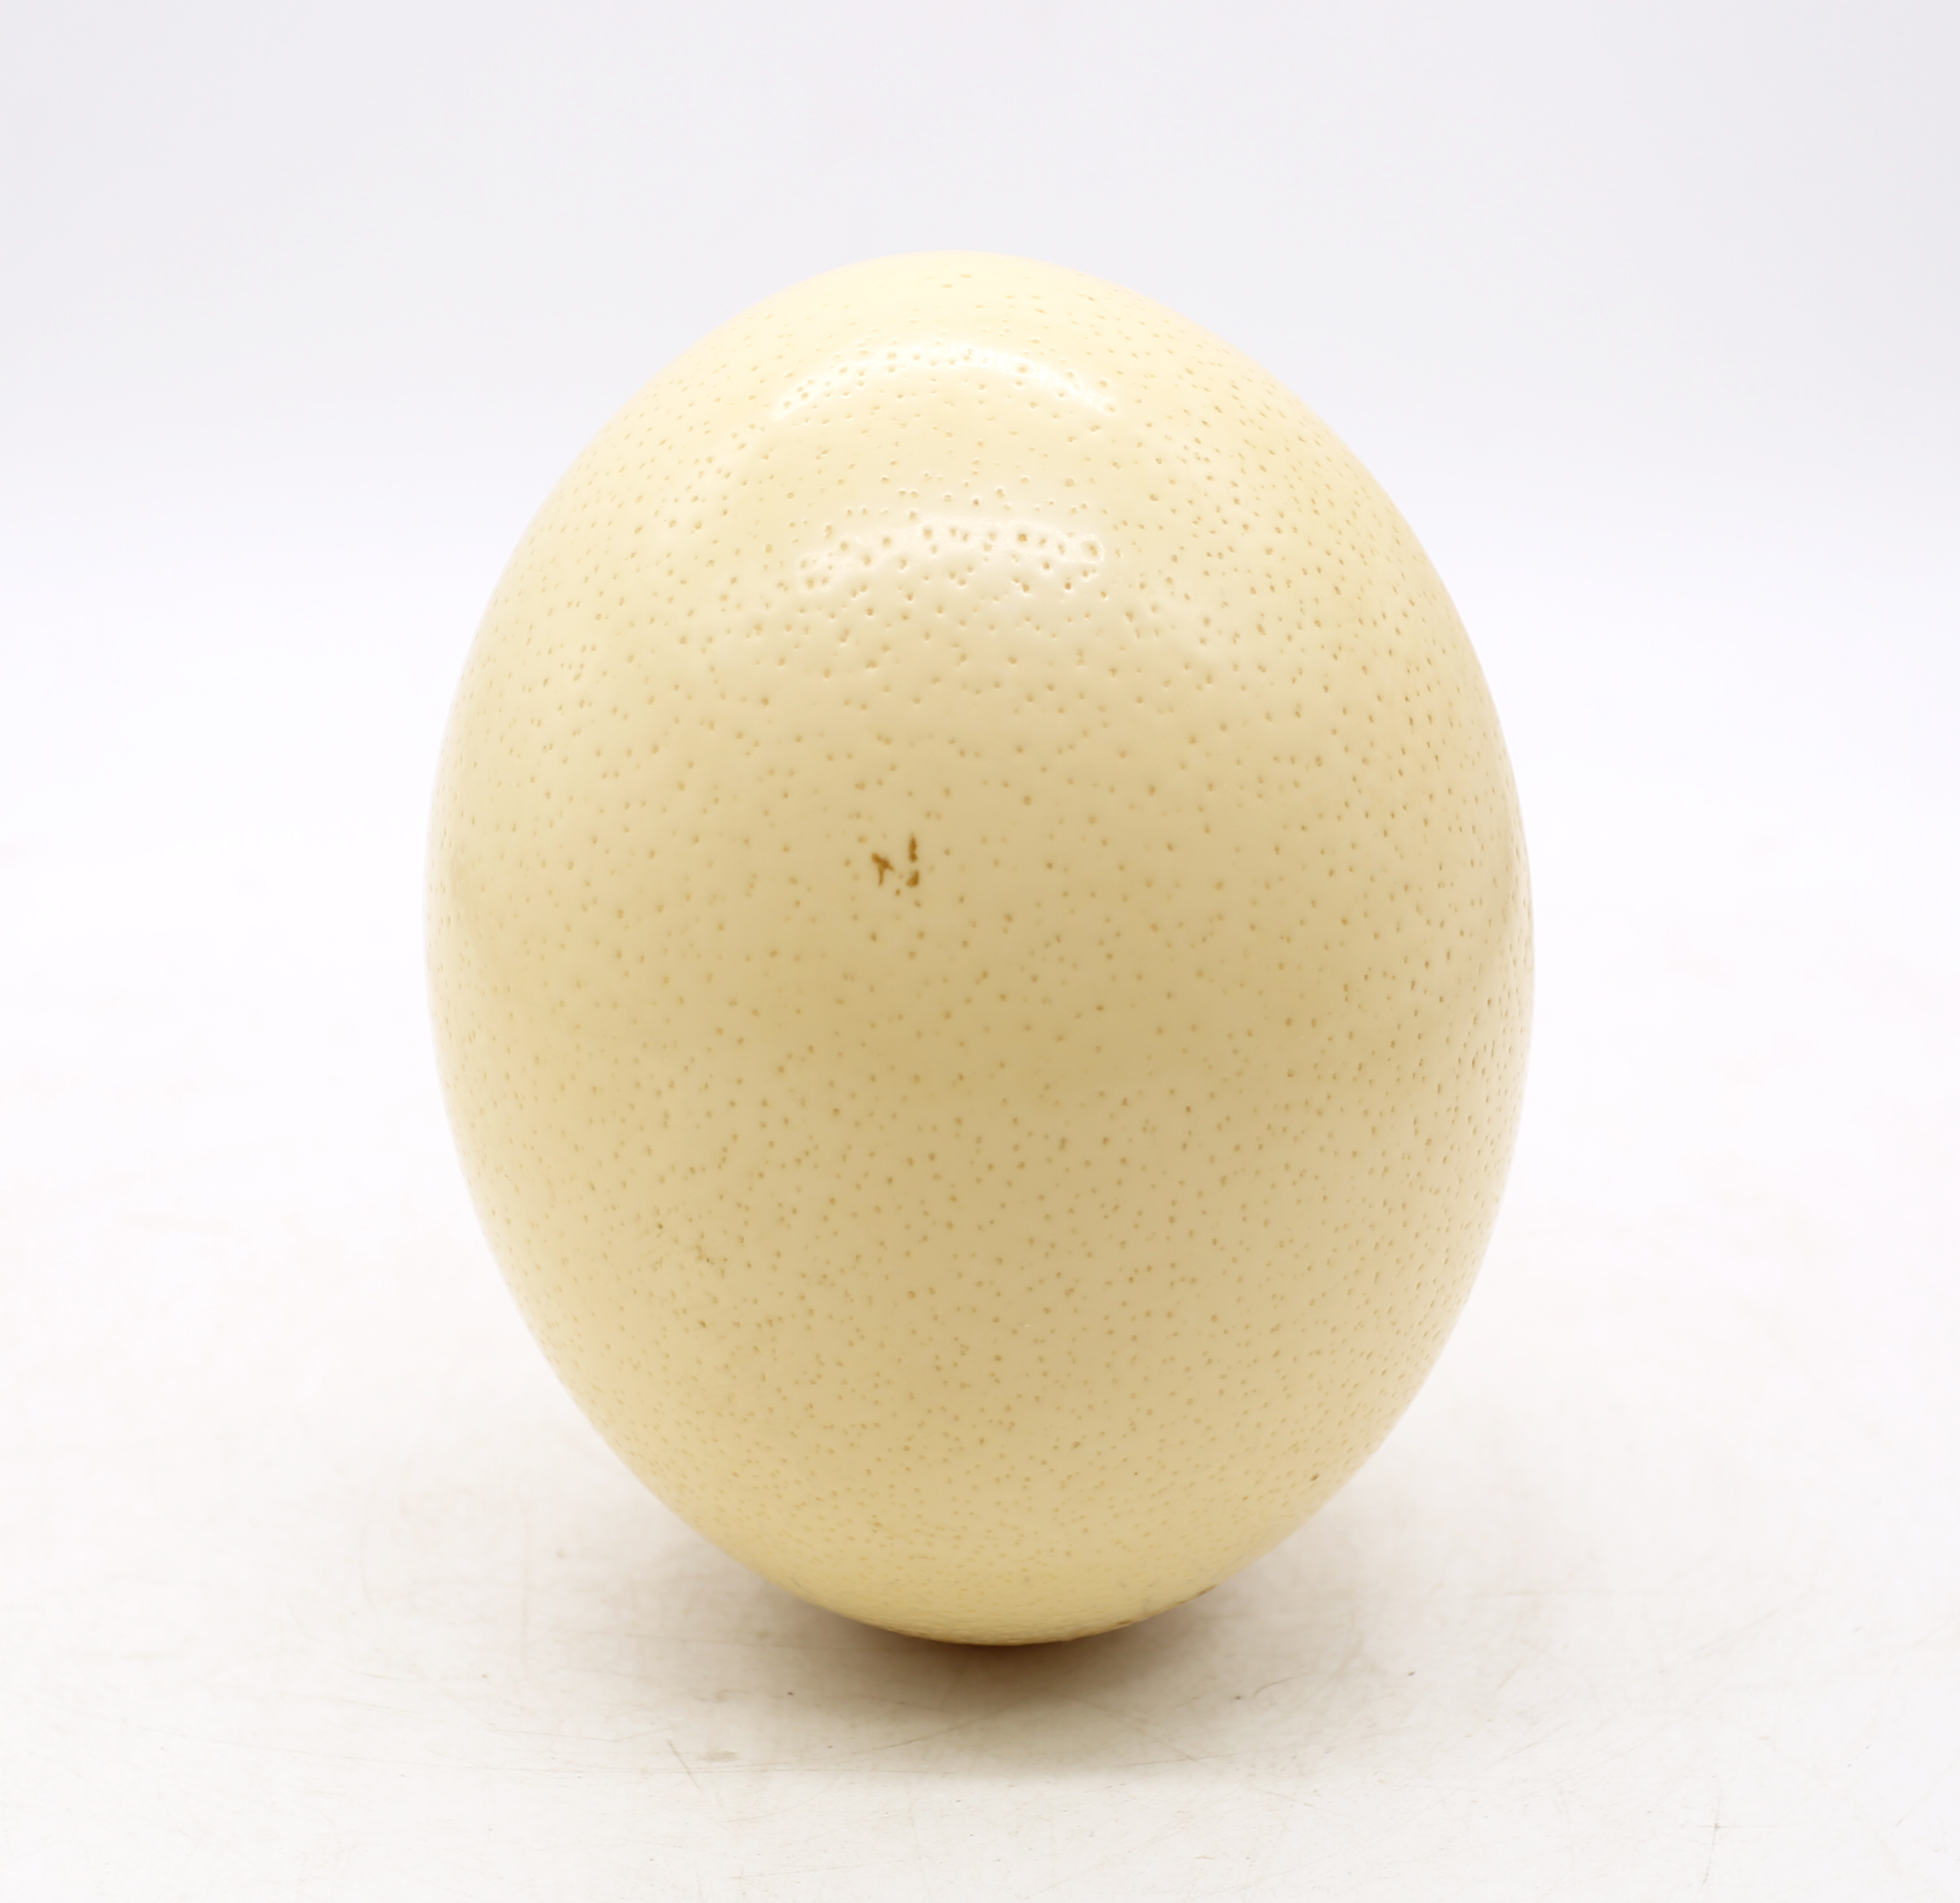 A single ostrich egg